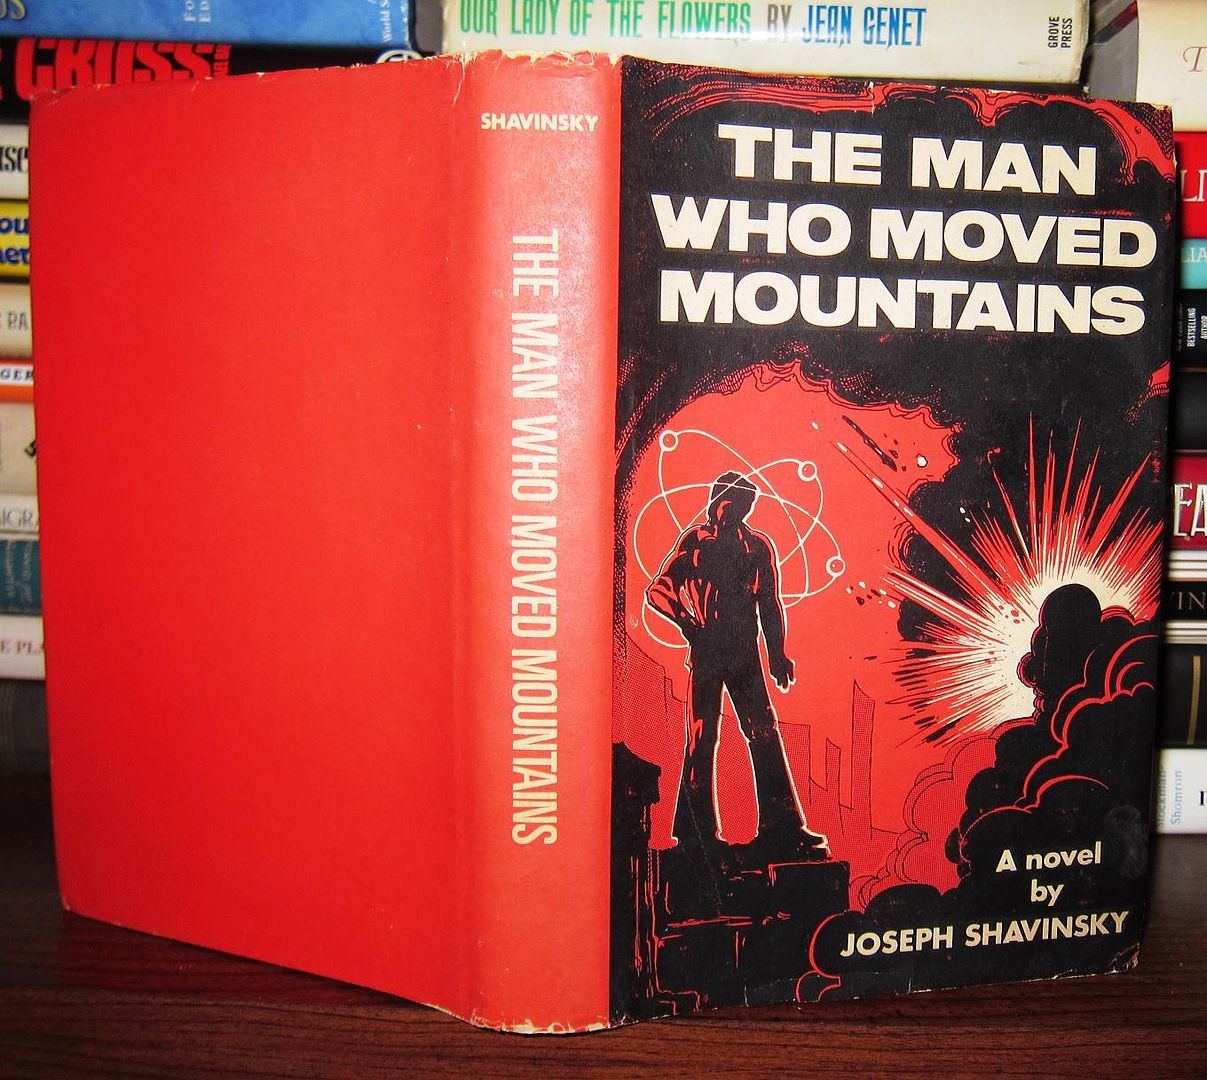 SHAVINSKY, JOSEPH - The Man Who Moved Mountains